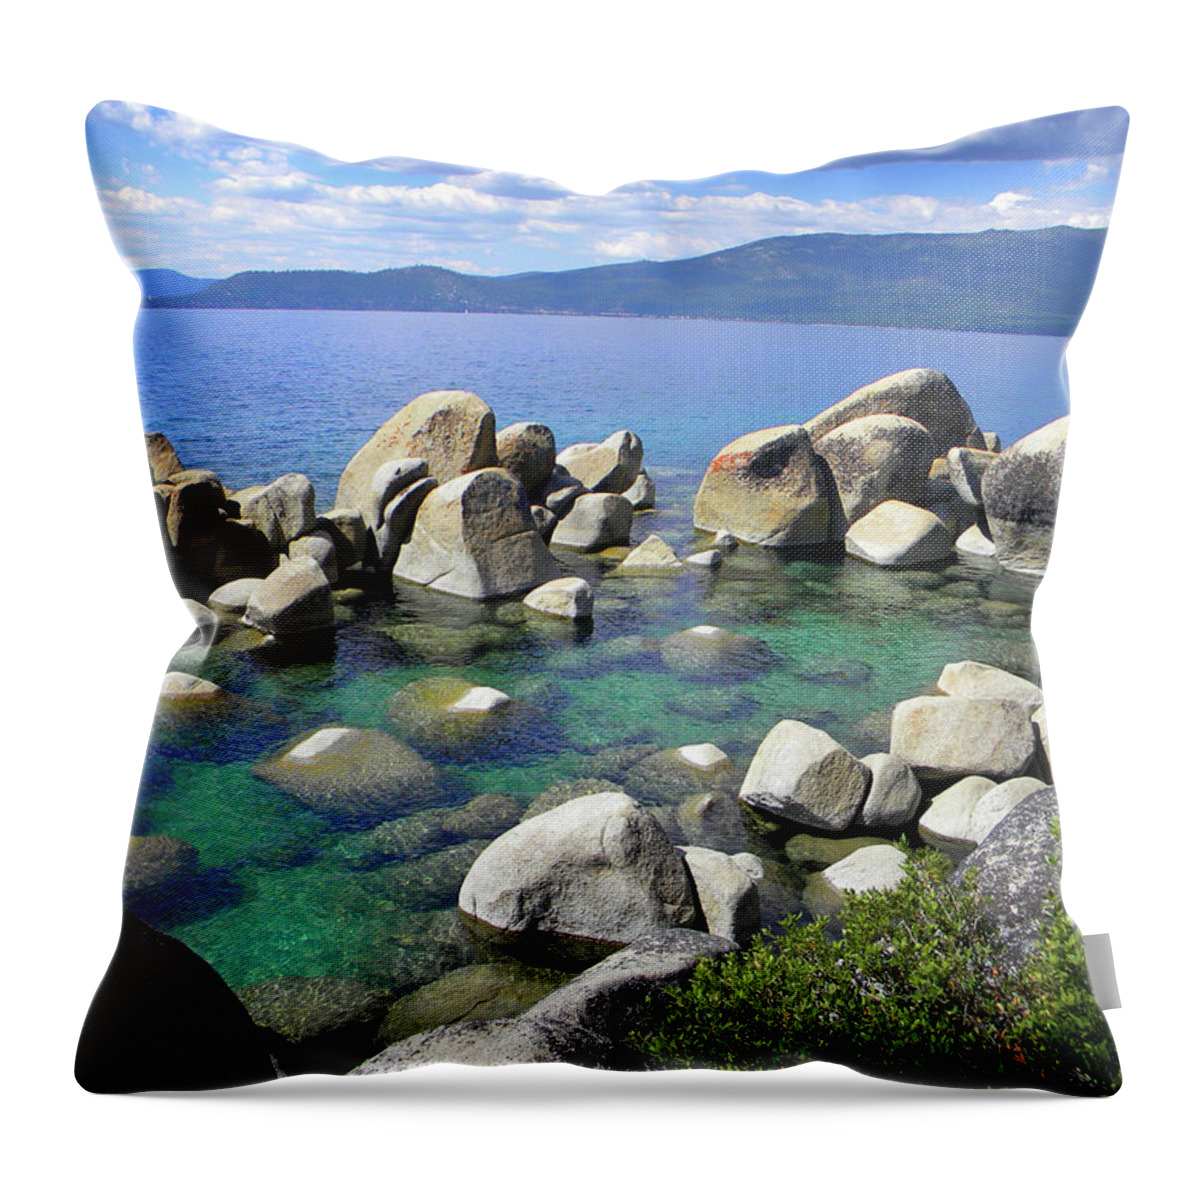 Emerald Waters Lake Tahoe Throw Pillow featuring the photograph Emerald Waters Lake Tahoe by Frank Wilson